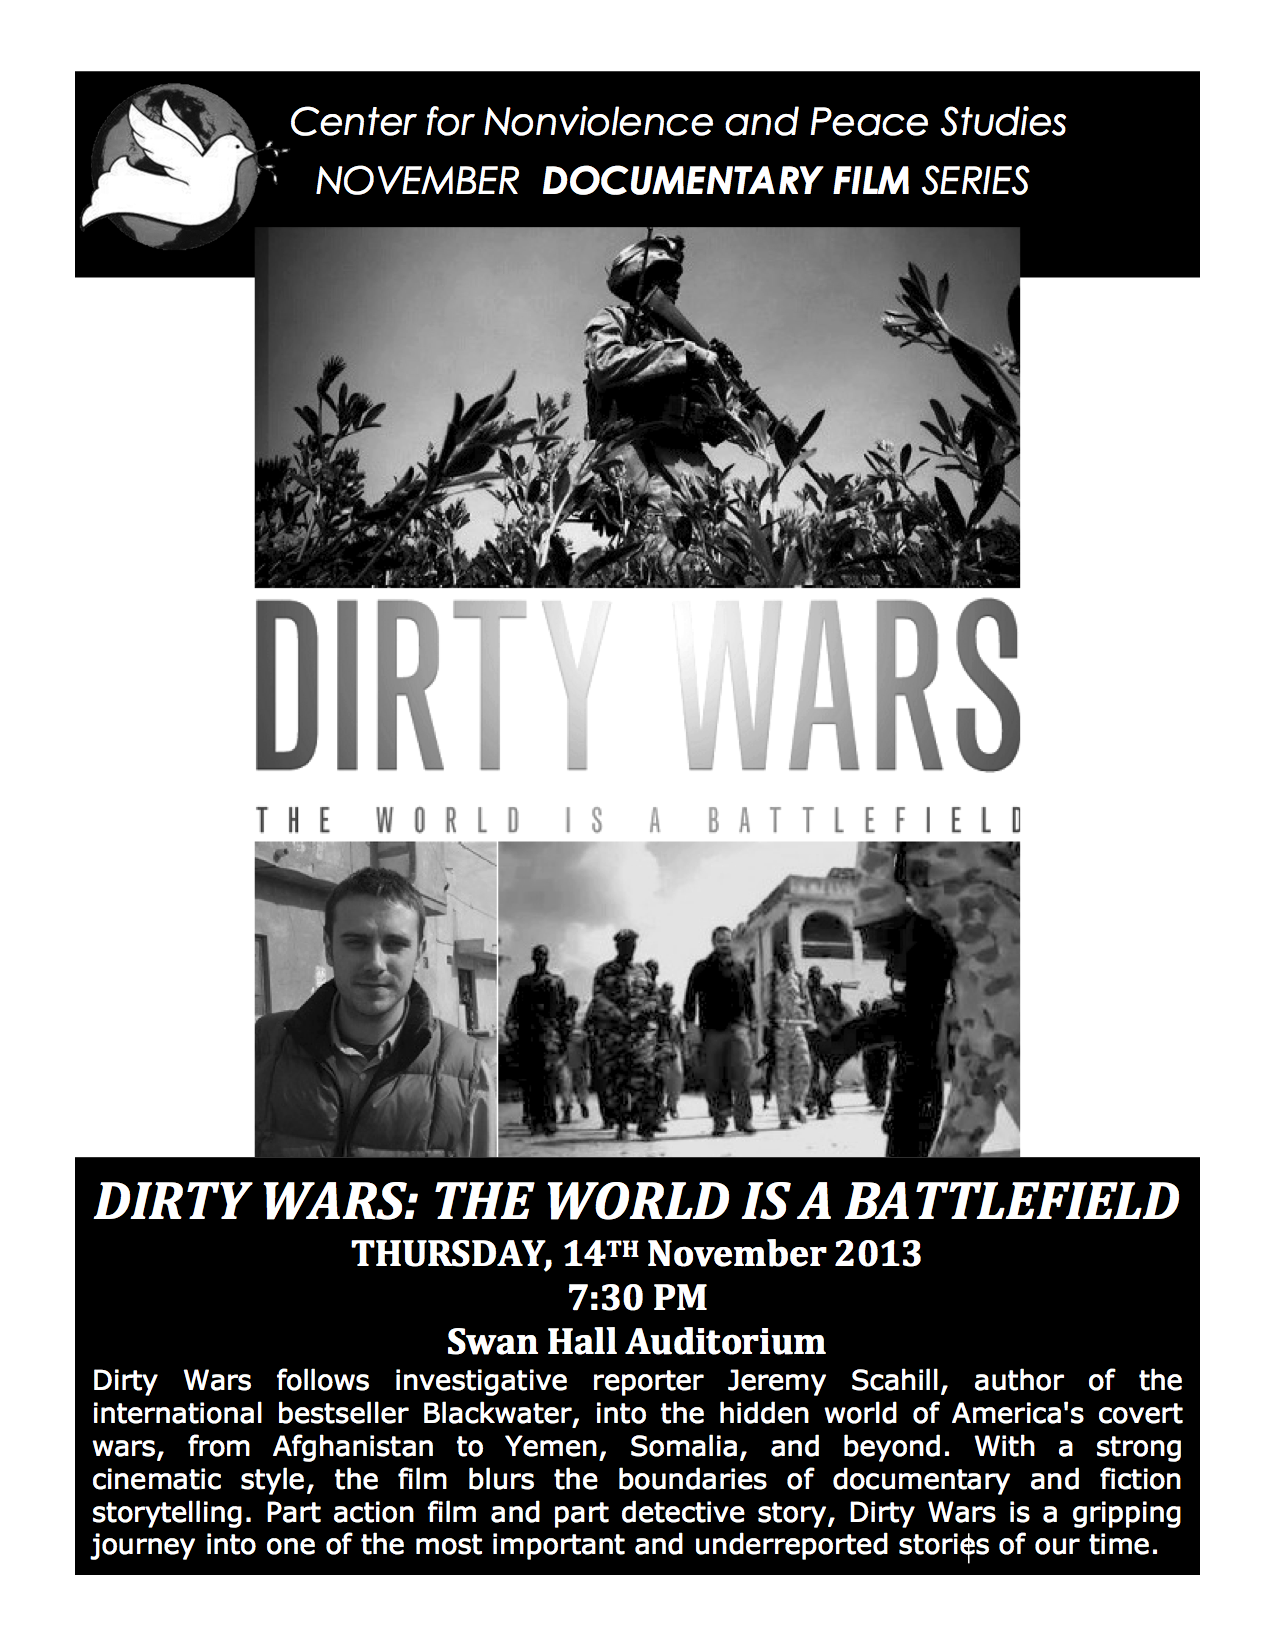 Dirty Wars: The World is a Battlefield, URI, Kingston, Swan Hall, Thursday Nov. 14, 2013, 7:30 pm